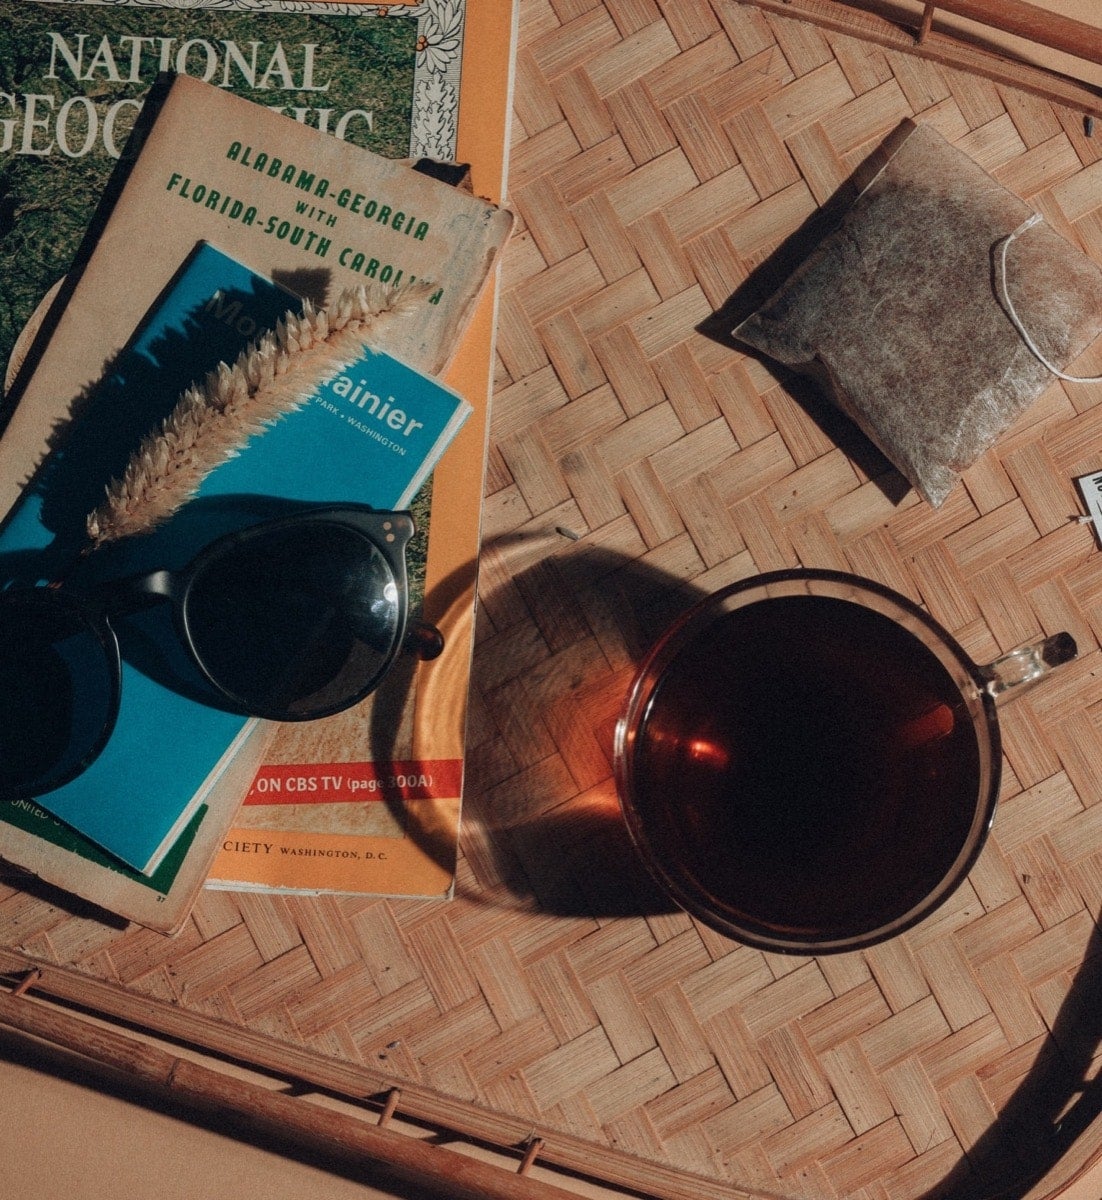 Nostalgia coffee, magazines, and sunglasses